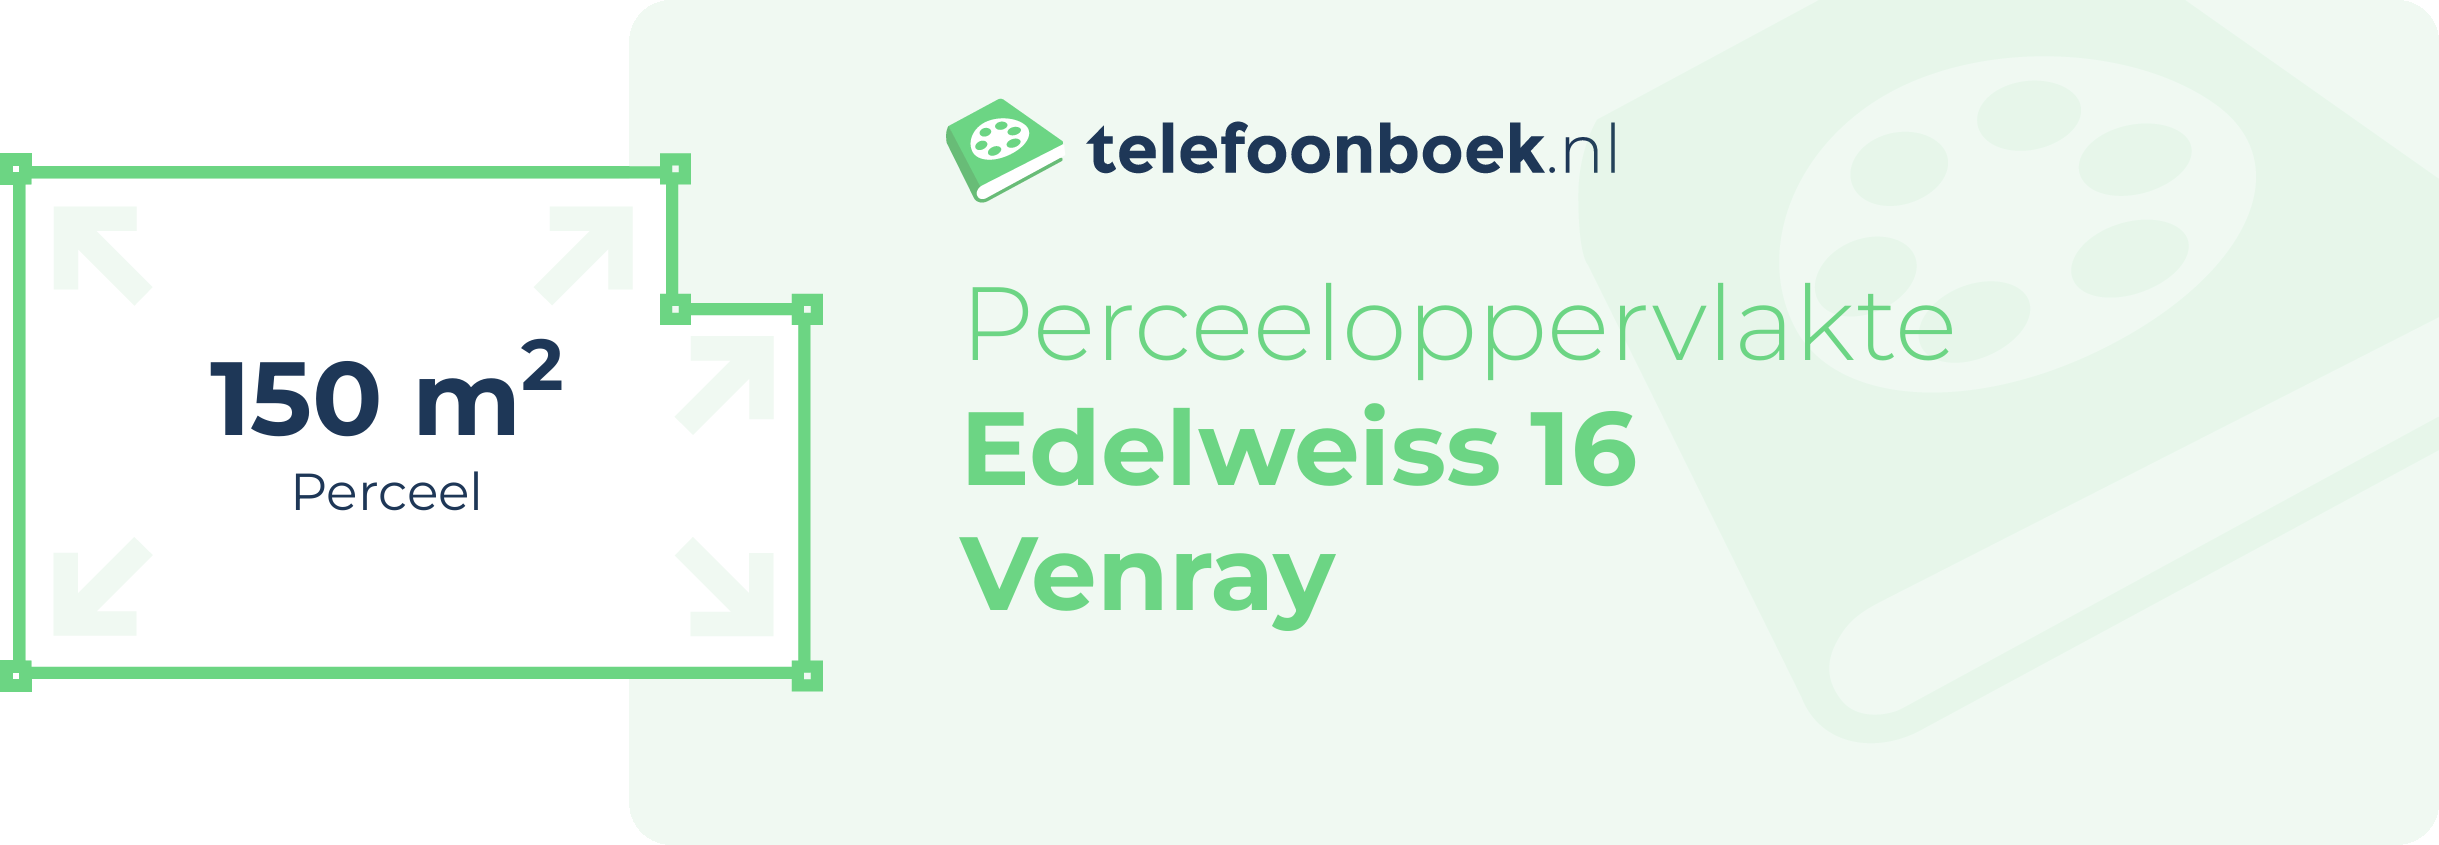 Perceeloppervlakte Edelweiss 16 Venray